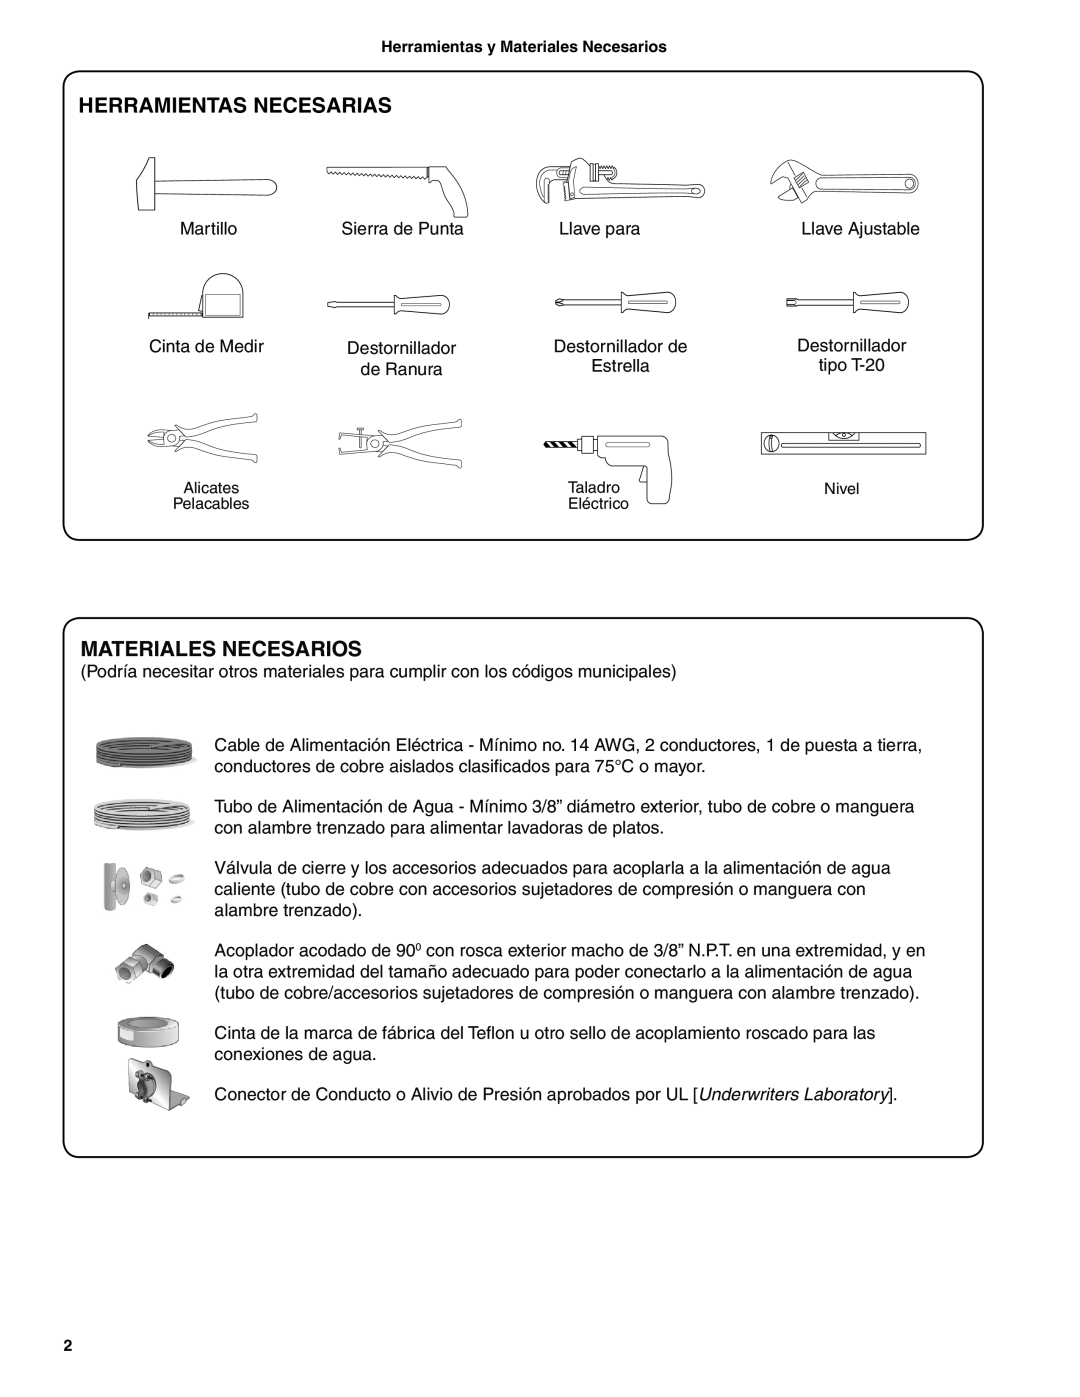 Bosch Appliances BSH Dishwasher important safety instructions Herramientas Necesarias, Materiales Necesarios 